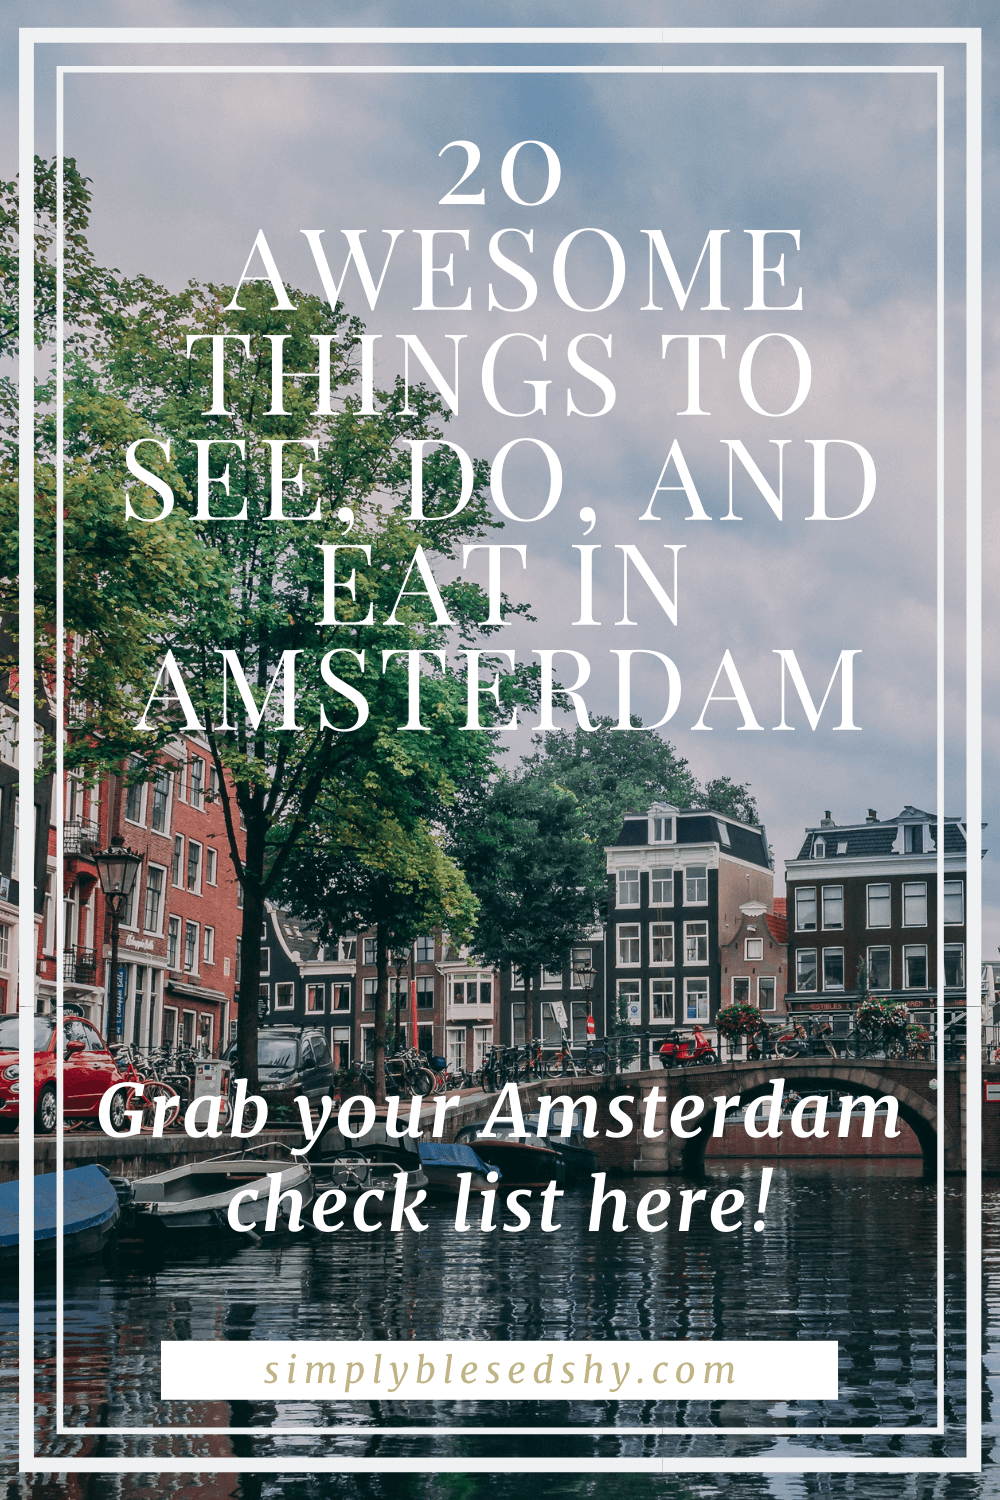 Amsterdam Bucket list